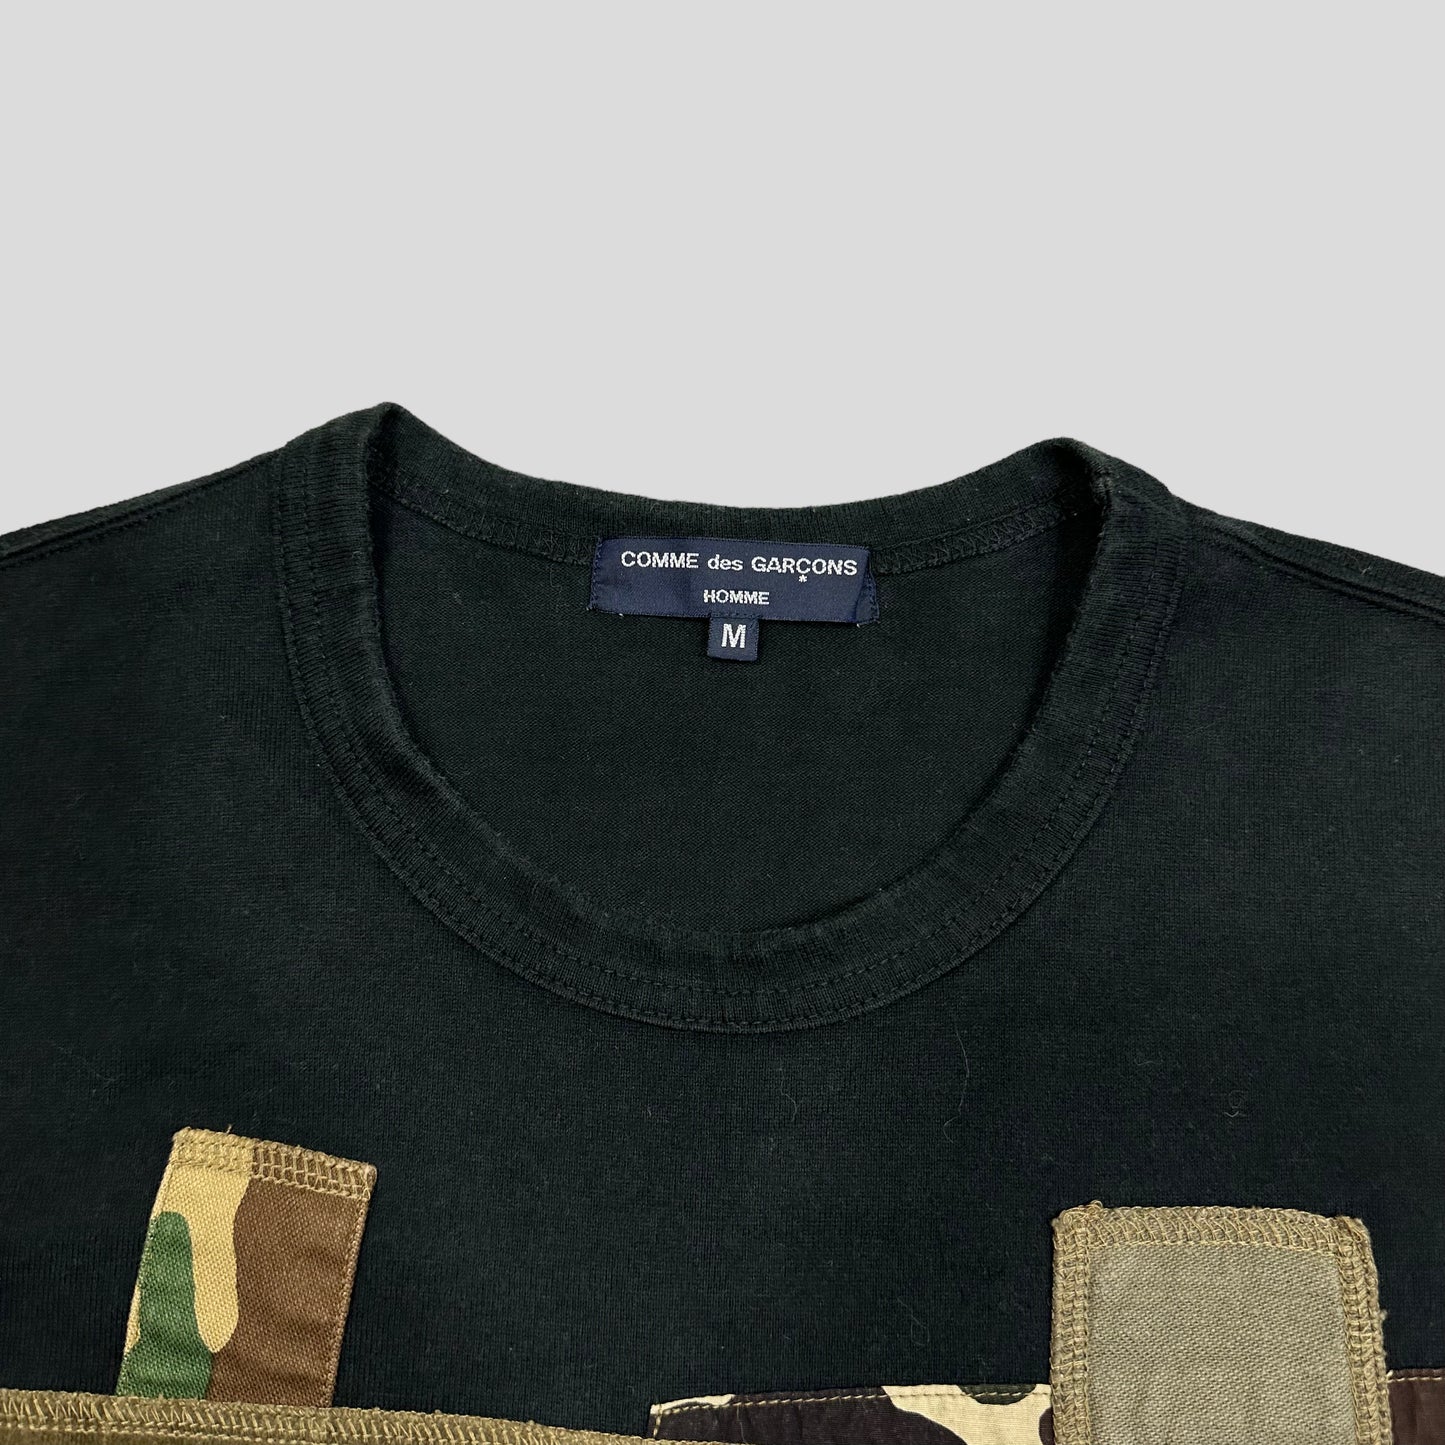 CDG Homme 2016 Camo Mixed Material Appliqué T-shirt - M